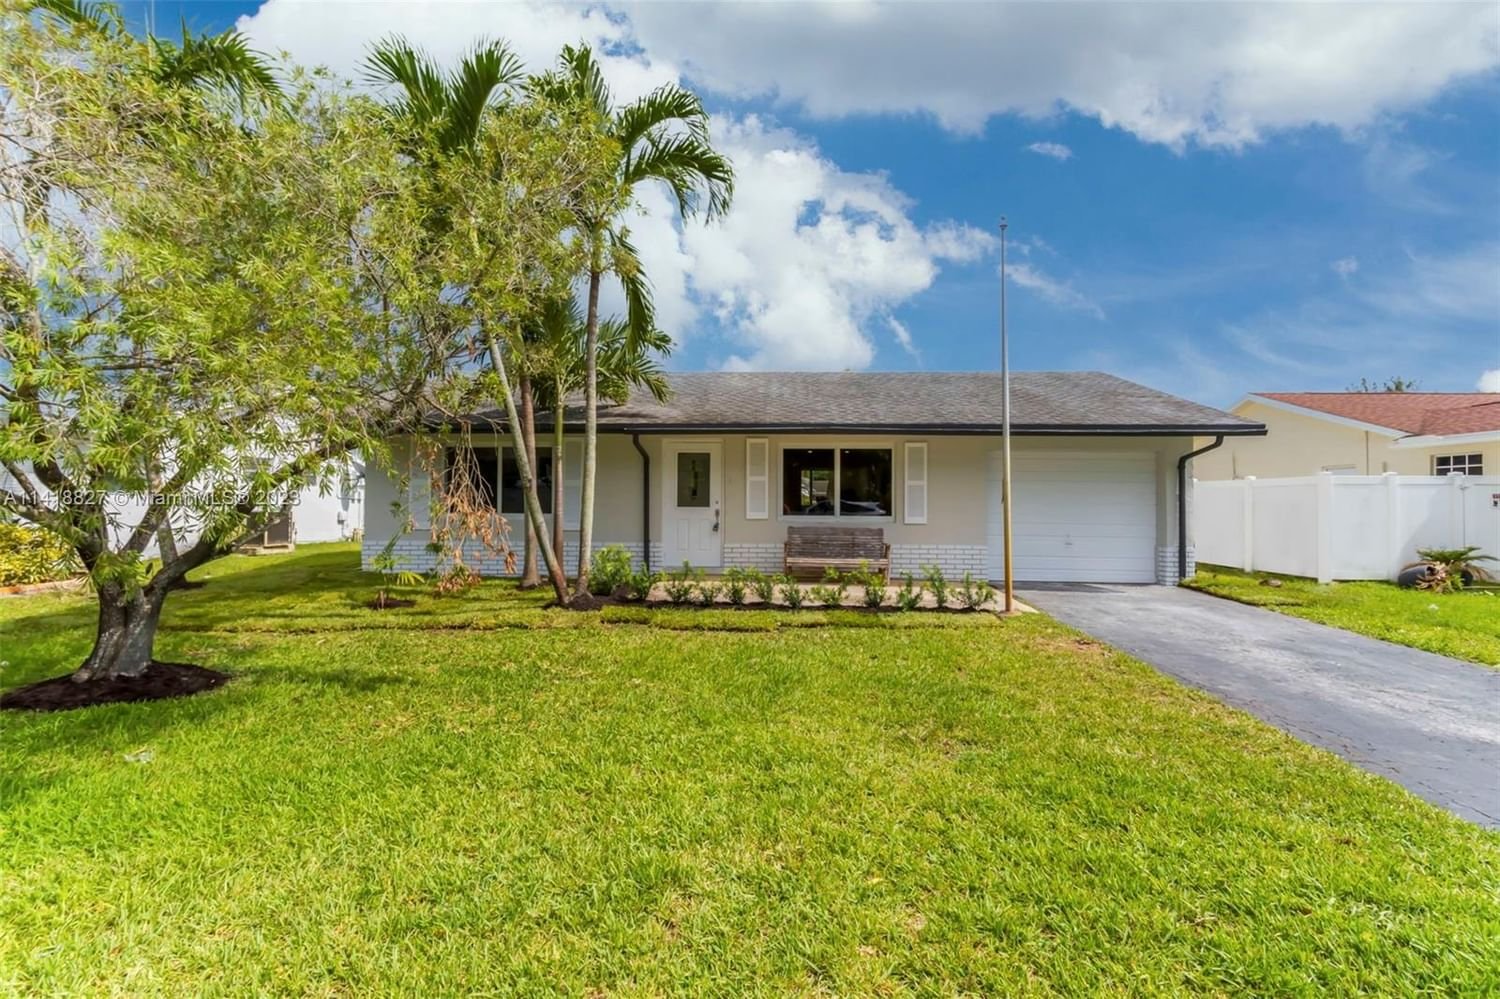 Real estate property located at 9108 81st Pl, Broward County, Tamarac, FL